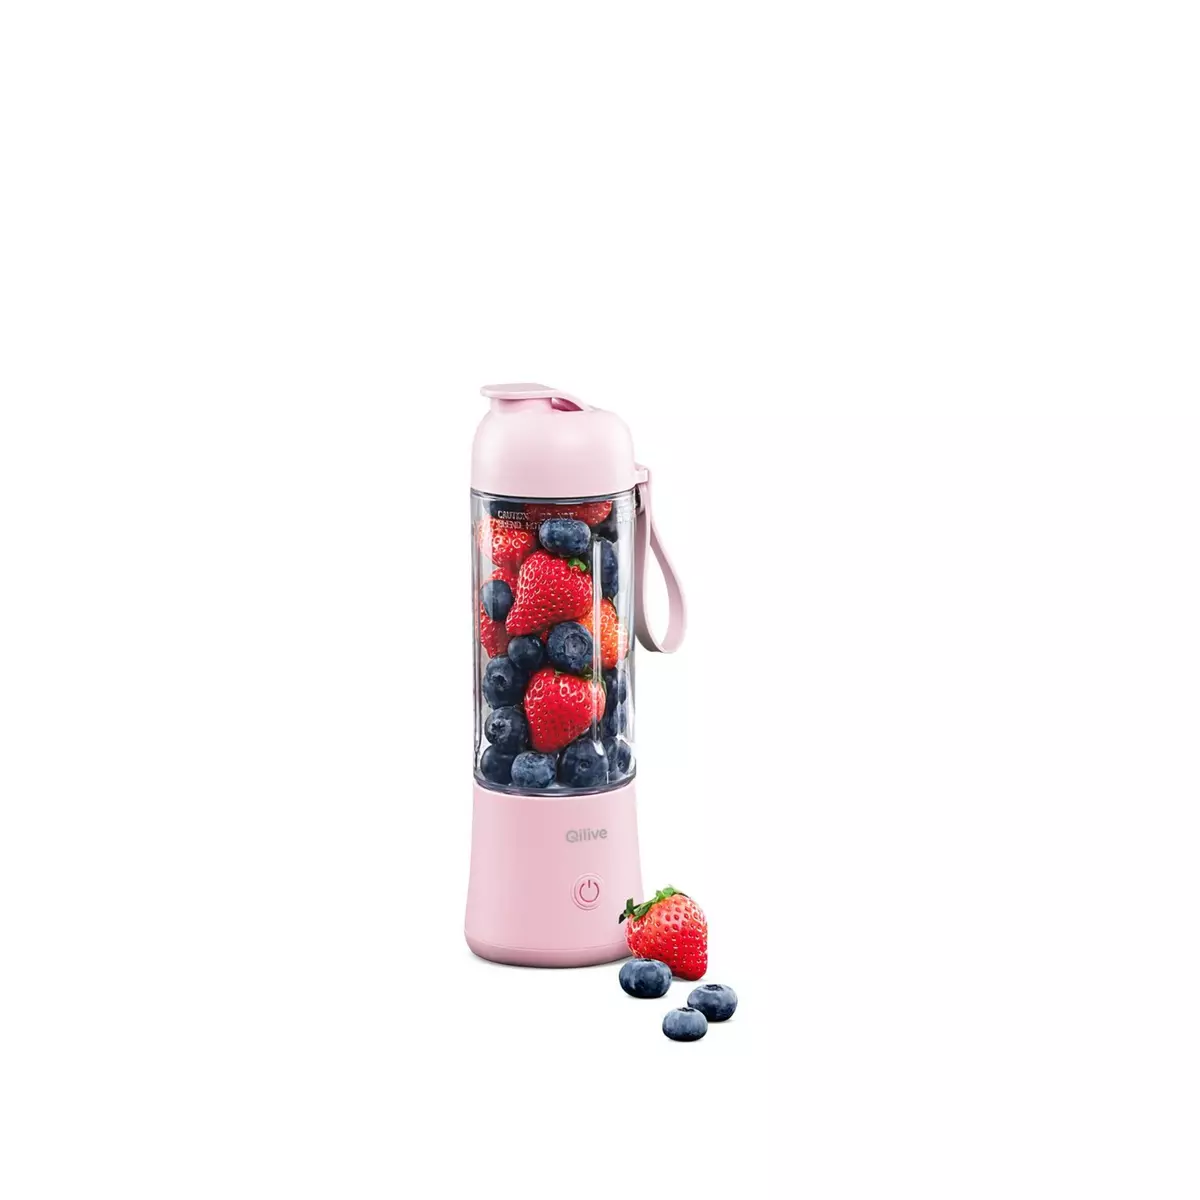 QILIVE Appareil à smoothies portable Q5417 - Rose